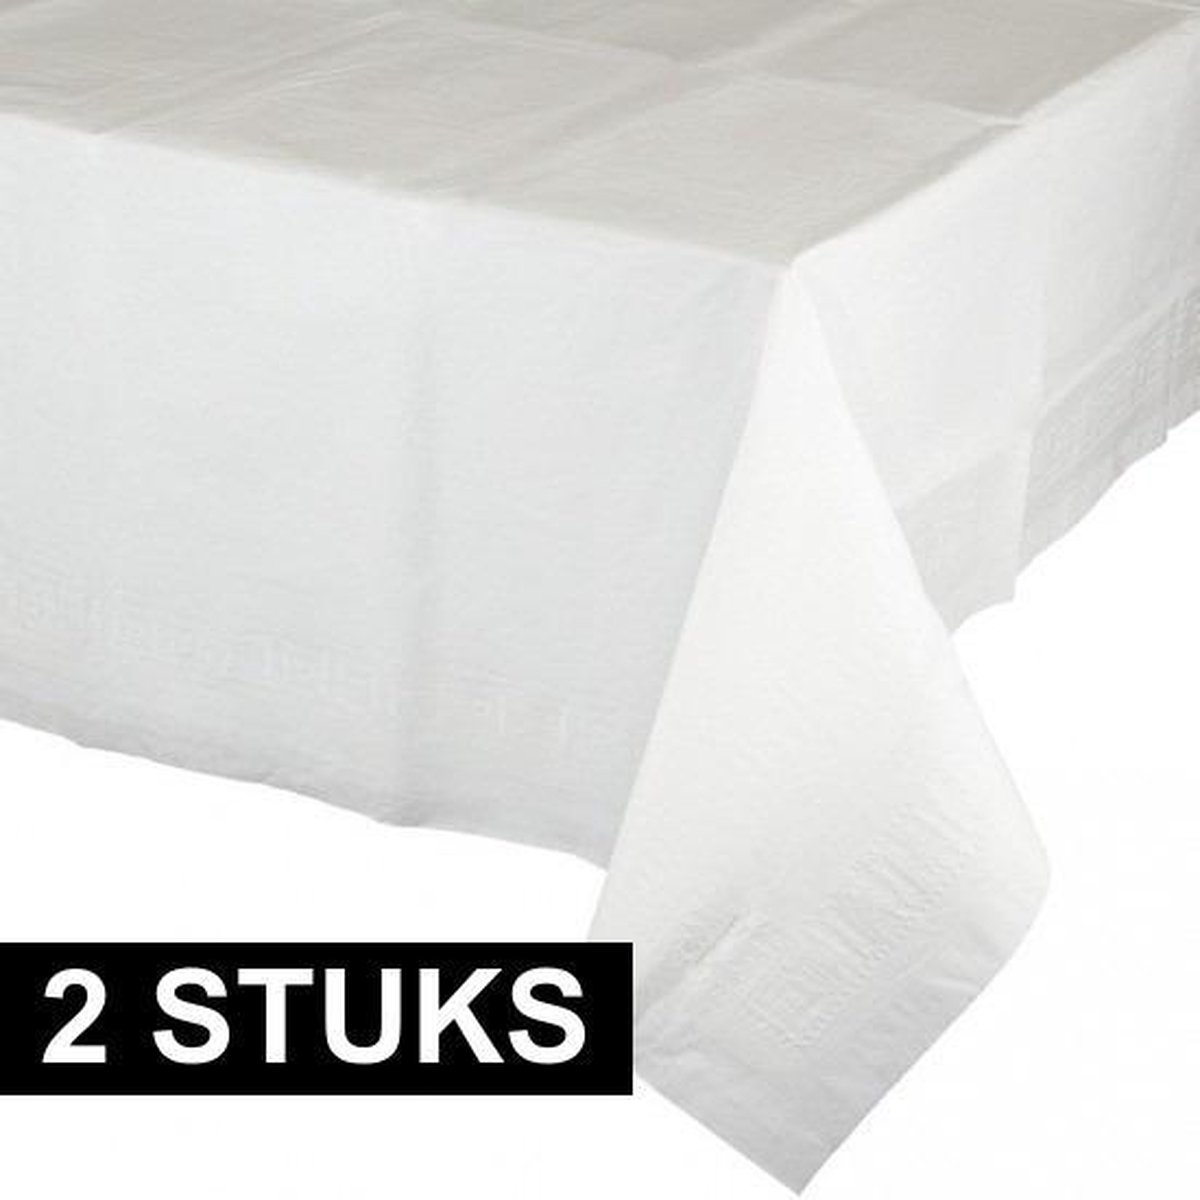 2x Witte tafelkleden 274 x 137 cm - Tafellakens wit 2 stuks - Creative Converting